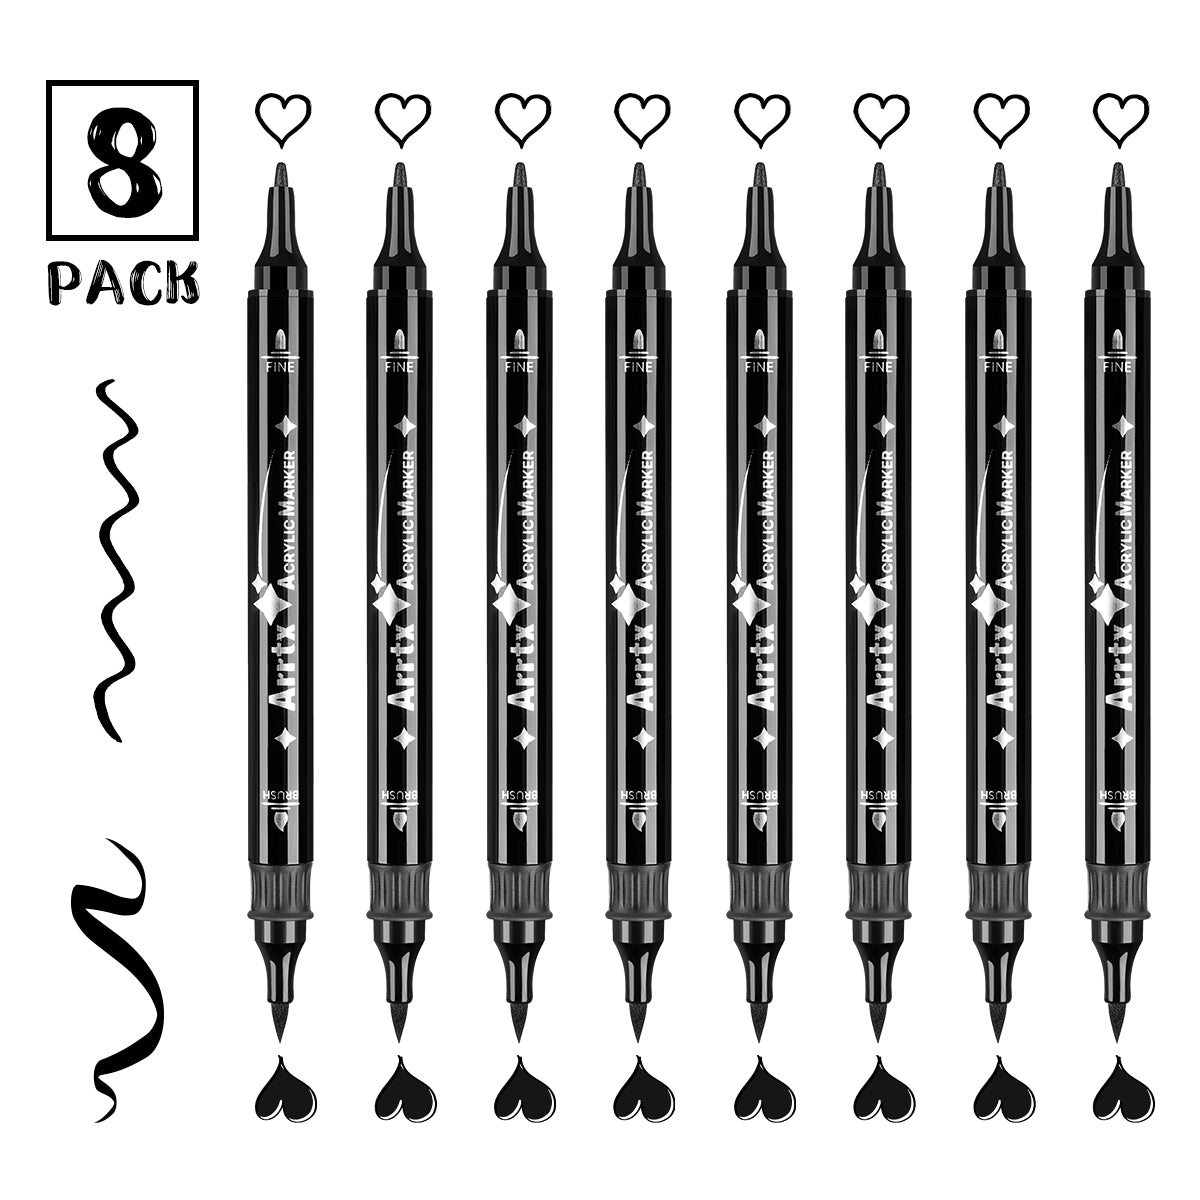 Arrtx Acrylic Paint Marker Pens – Gocart